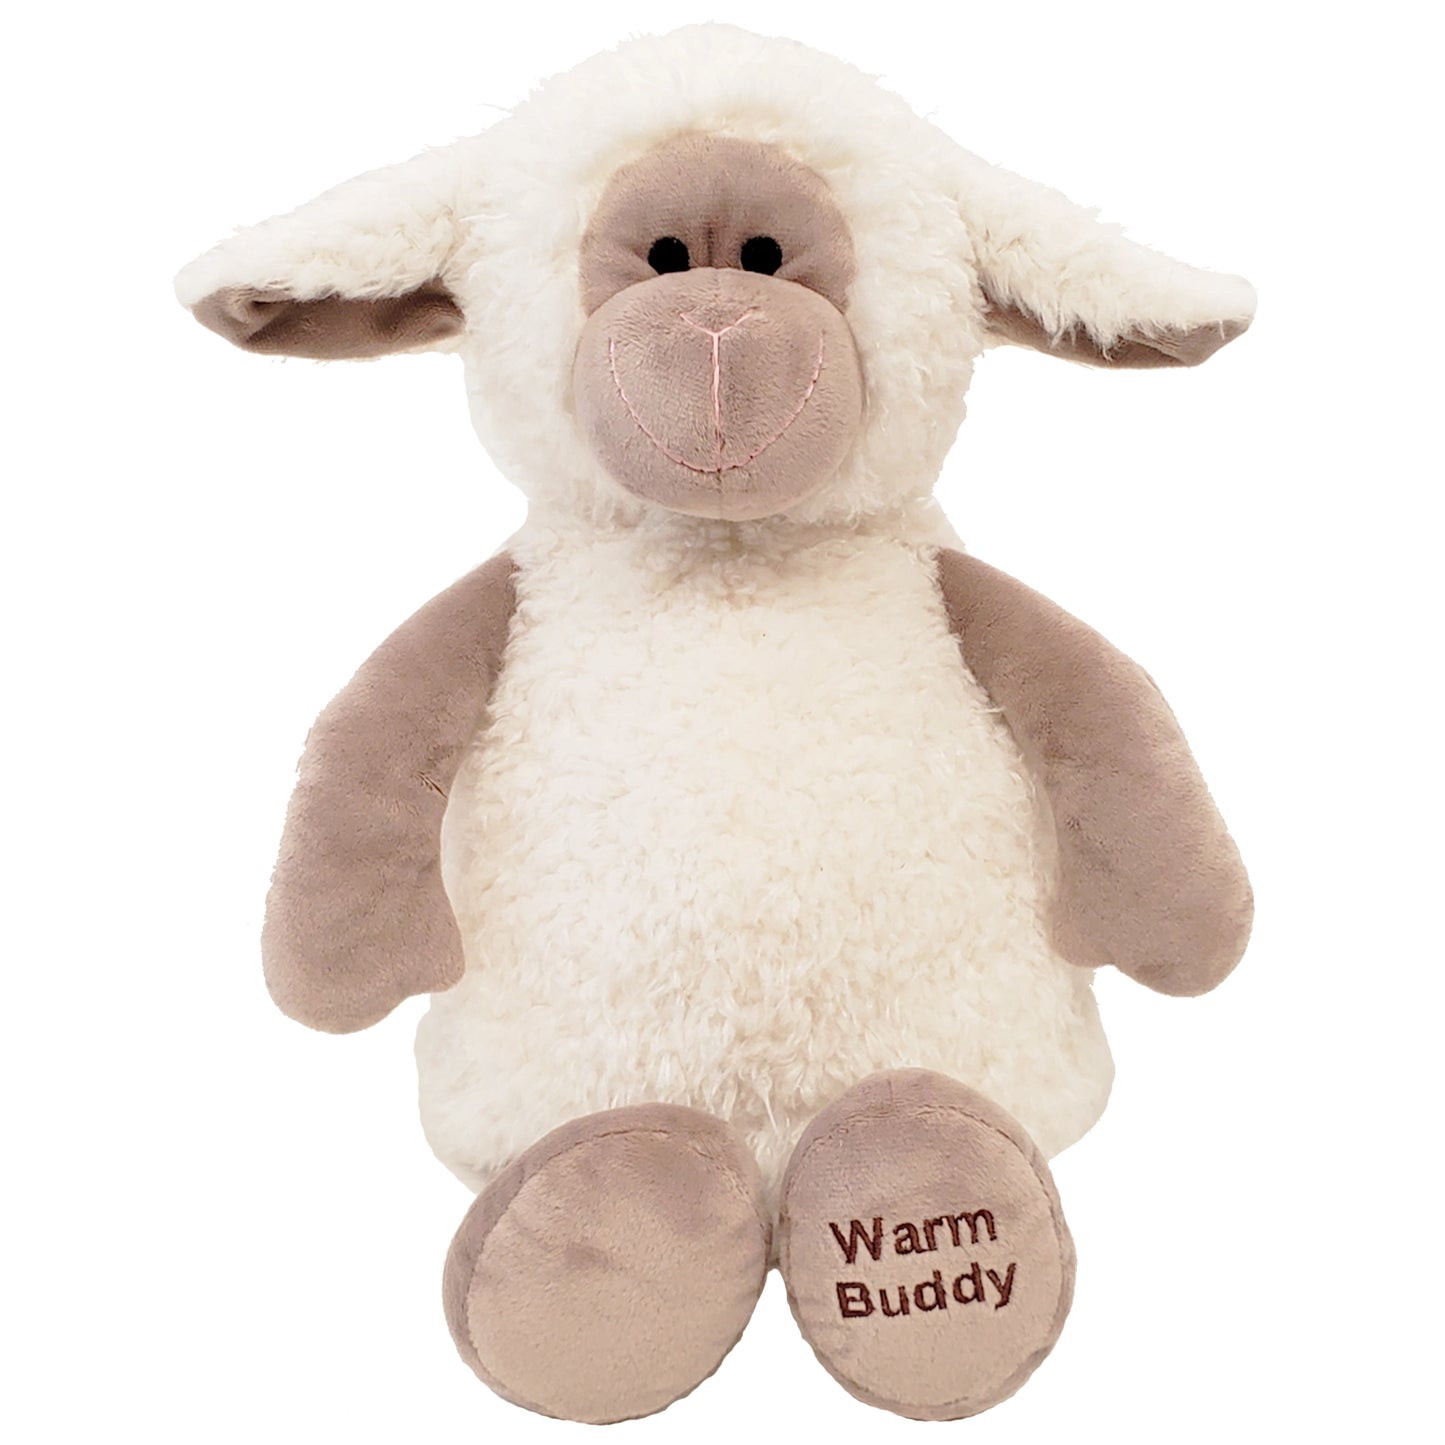 Warm buddy lamb